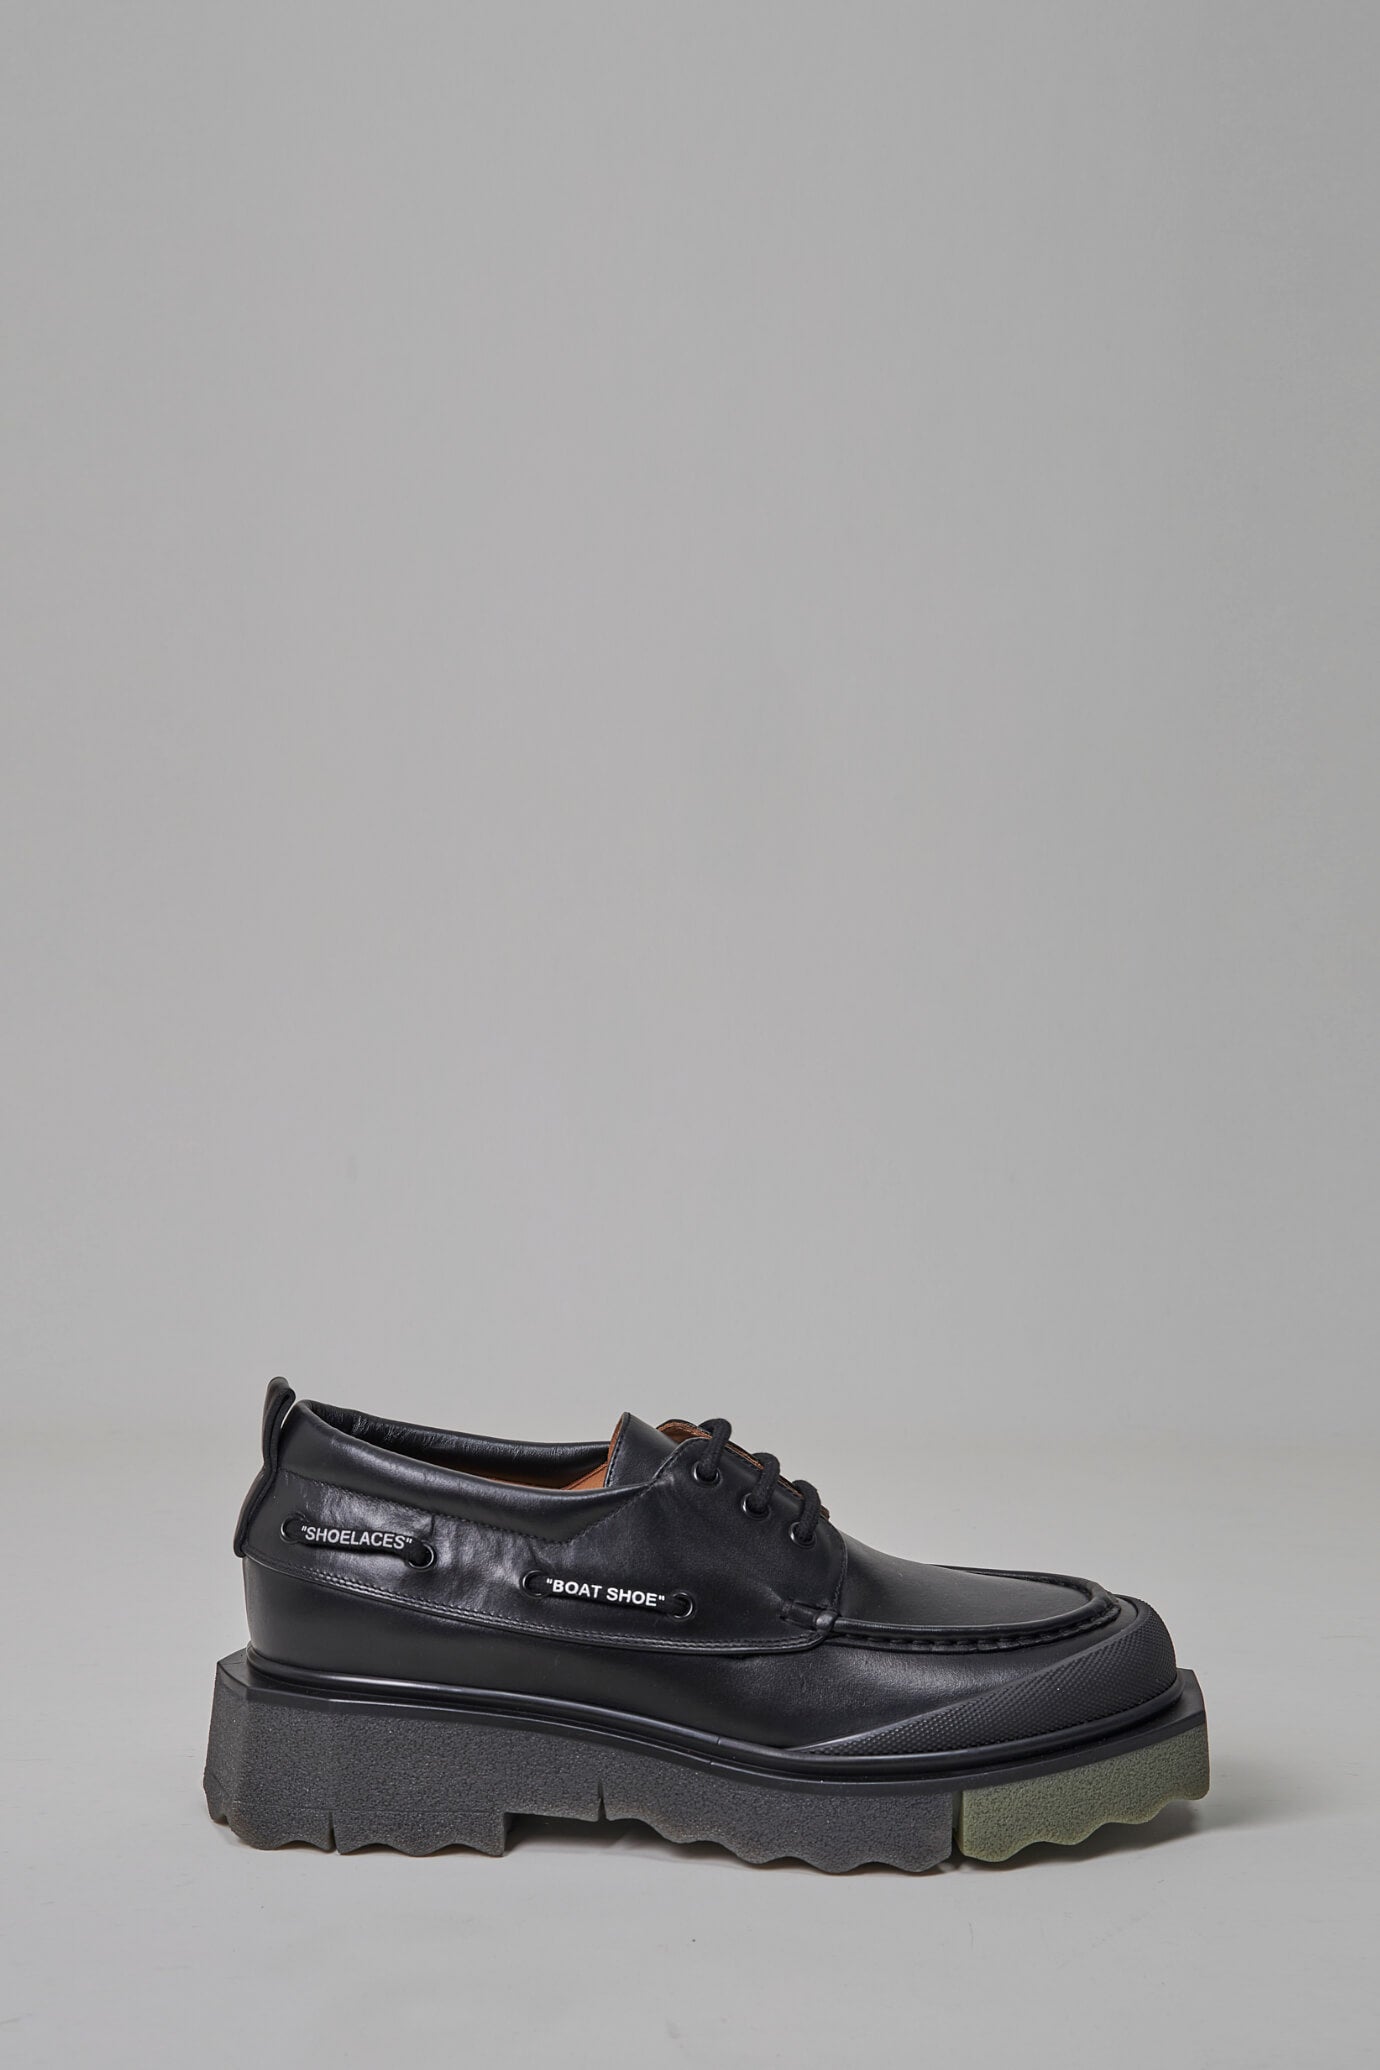 Sponge Leather Boat shoe, black